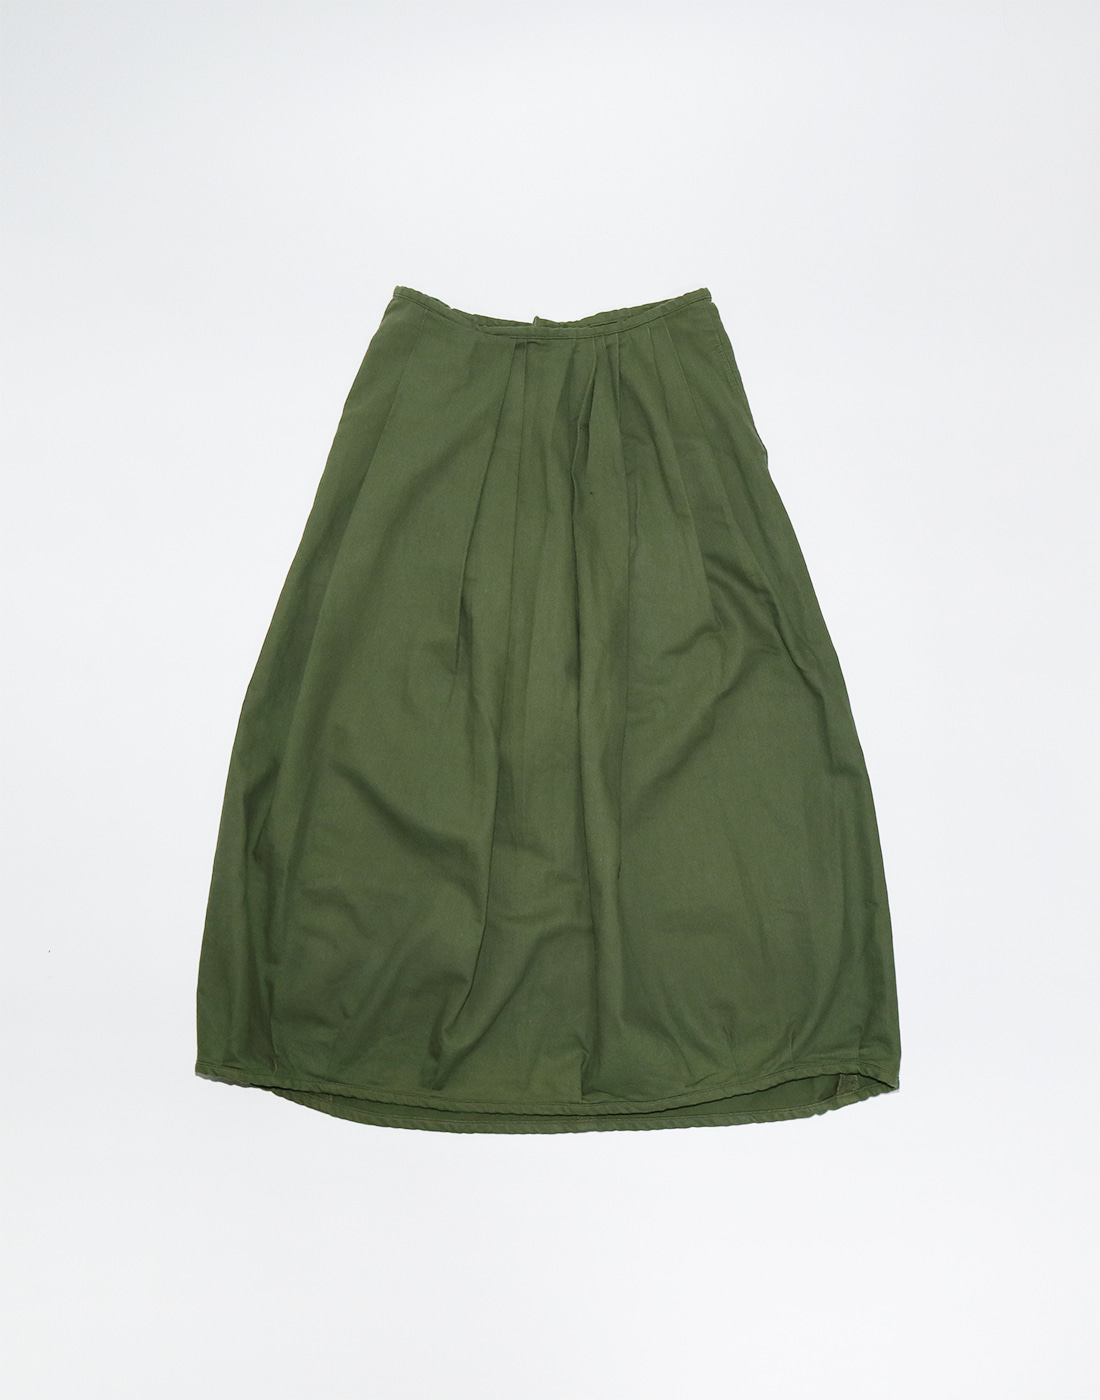 OMNIGOD Chino Balloon Skirt, Olive